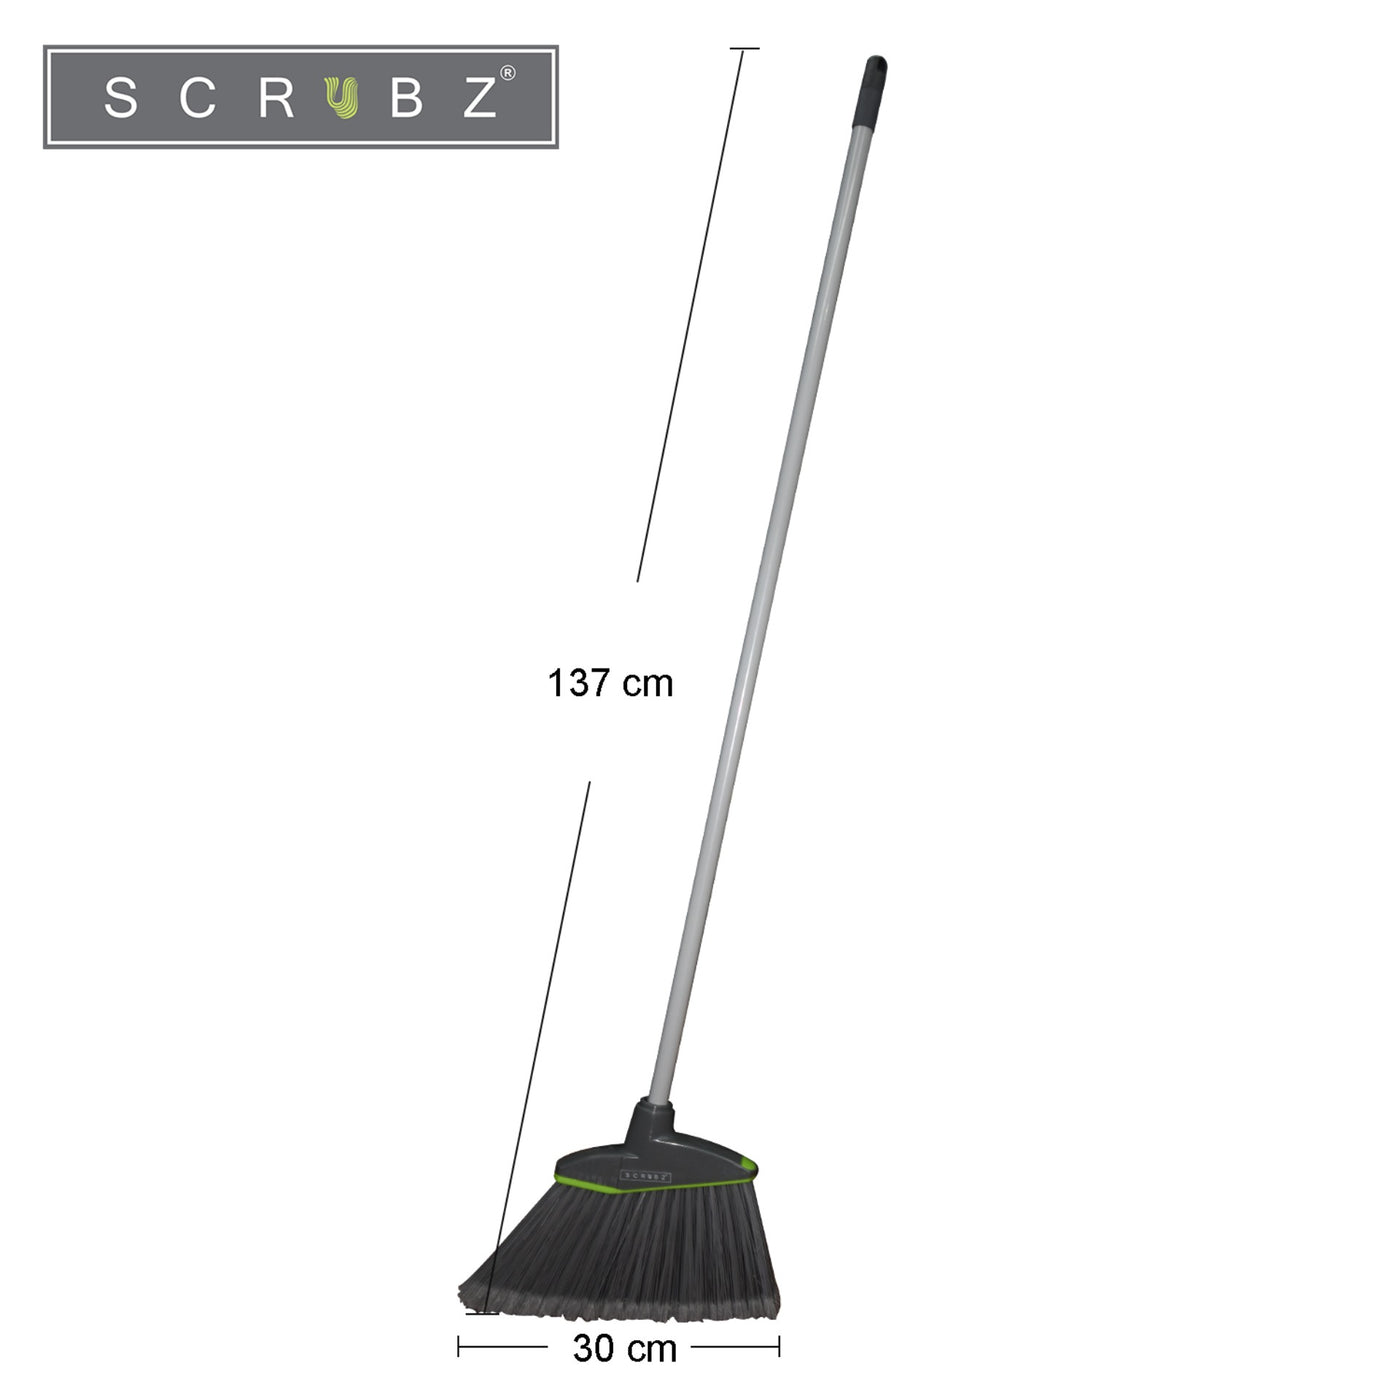 SCRUBZ Premium Long Angle Broom